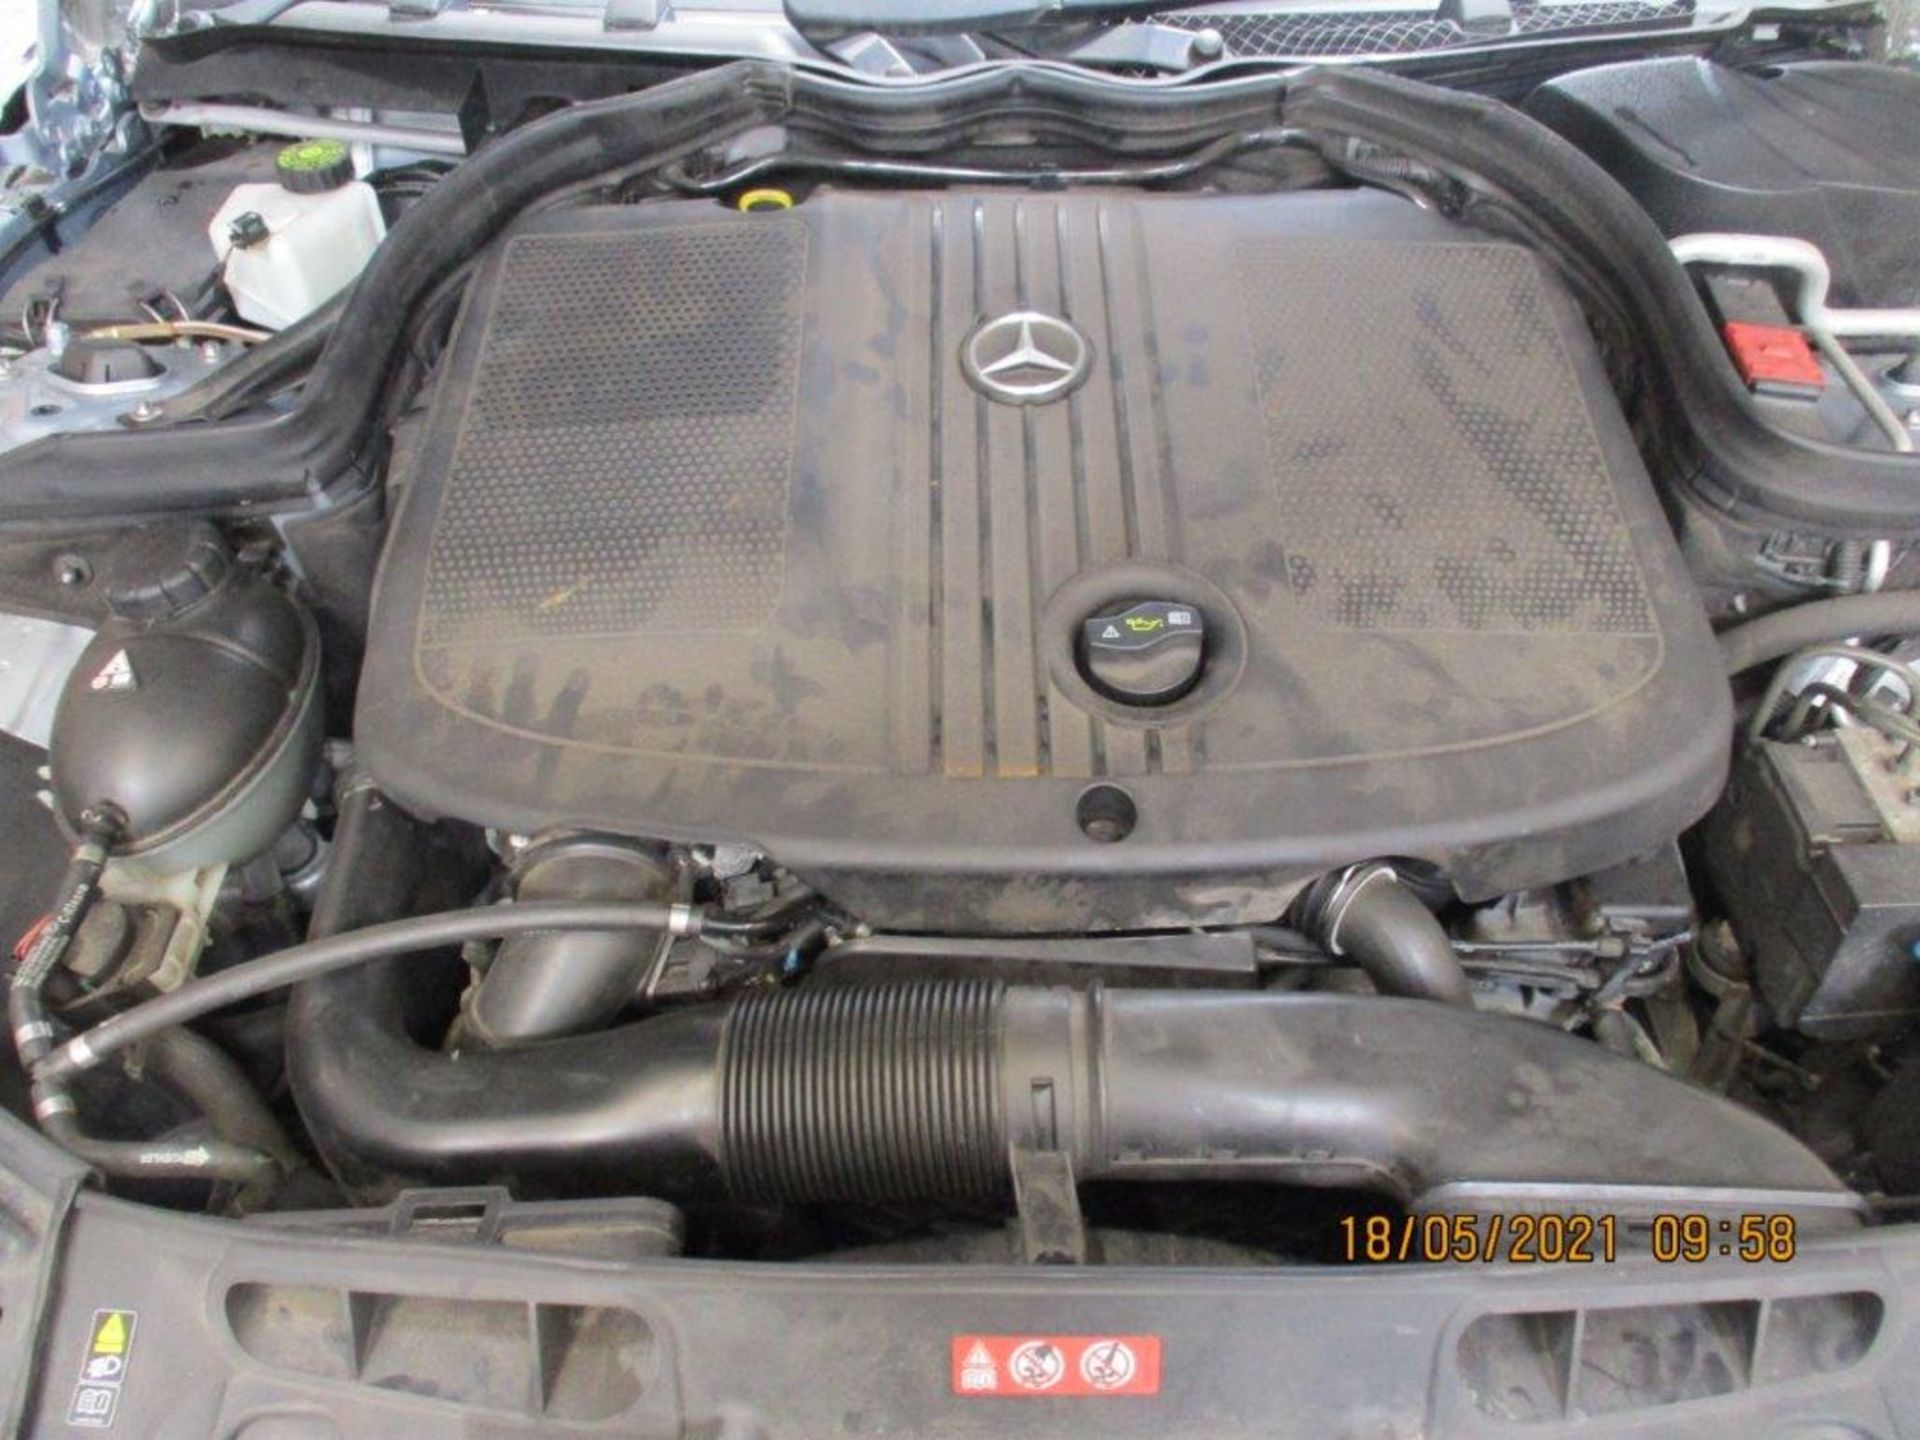 62 12 Mercedes C220 AMG Sport + CDI - Image 8 of 28